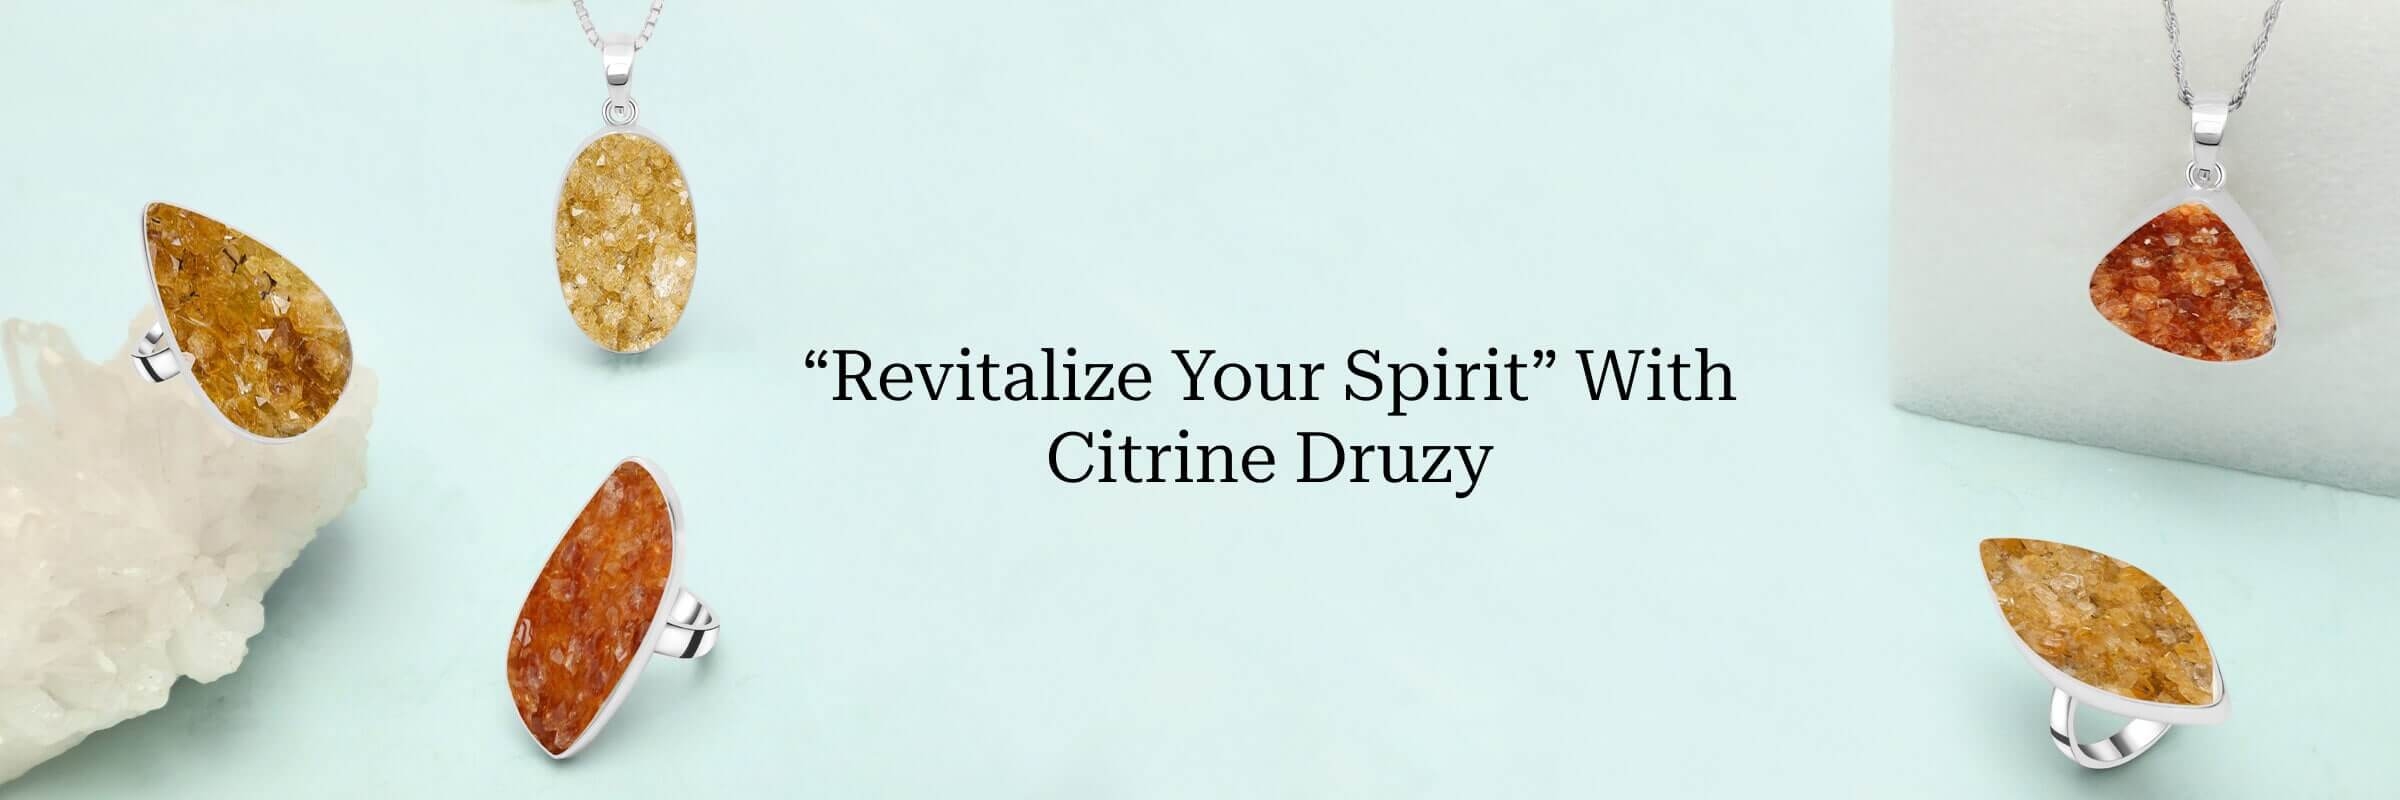 Citrine Druzy Emotional Healing Properties